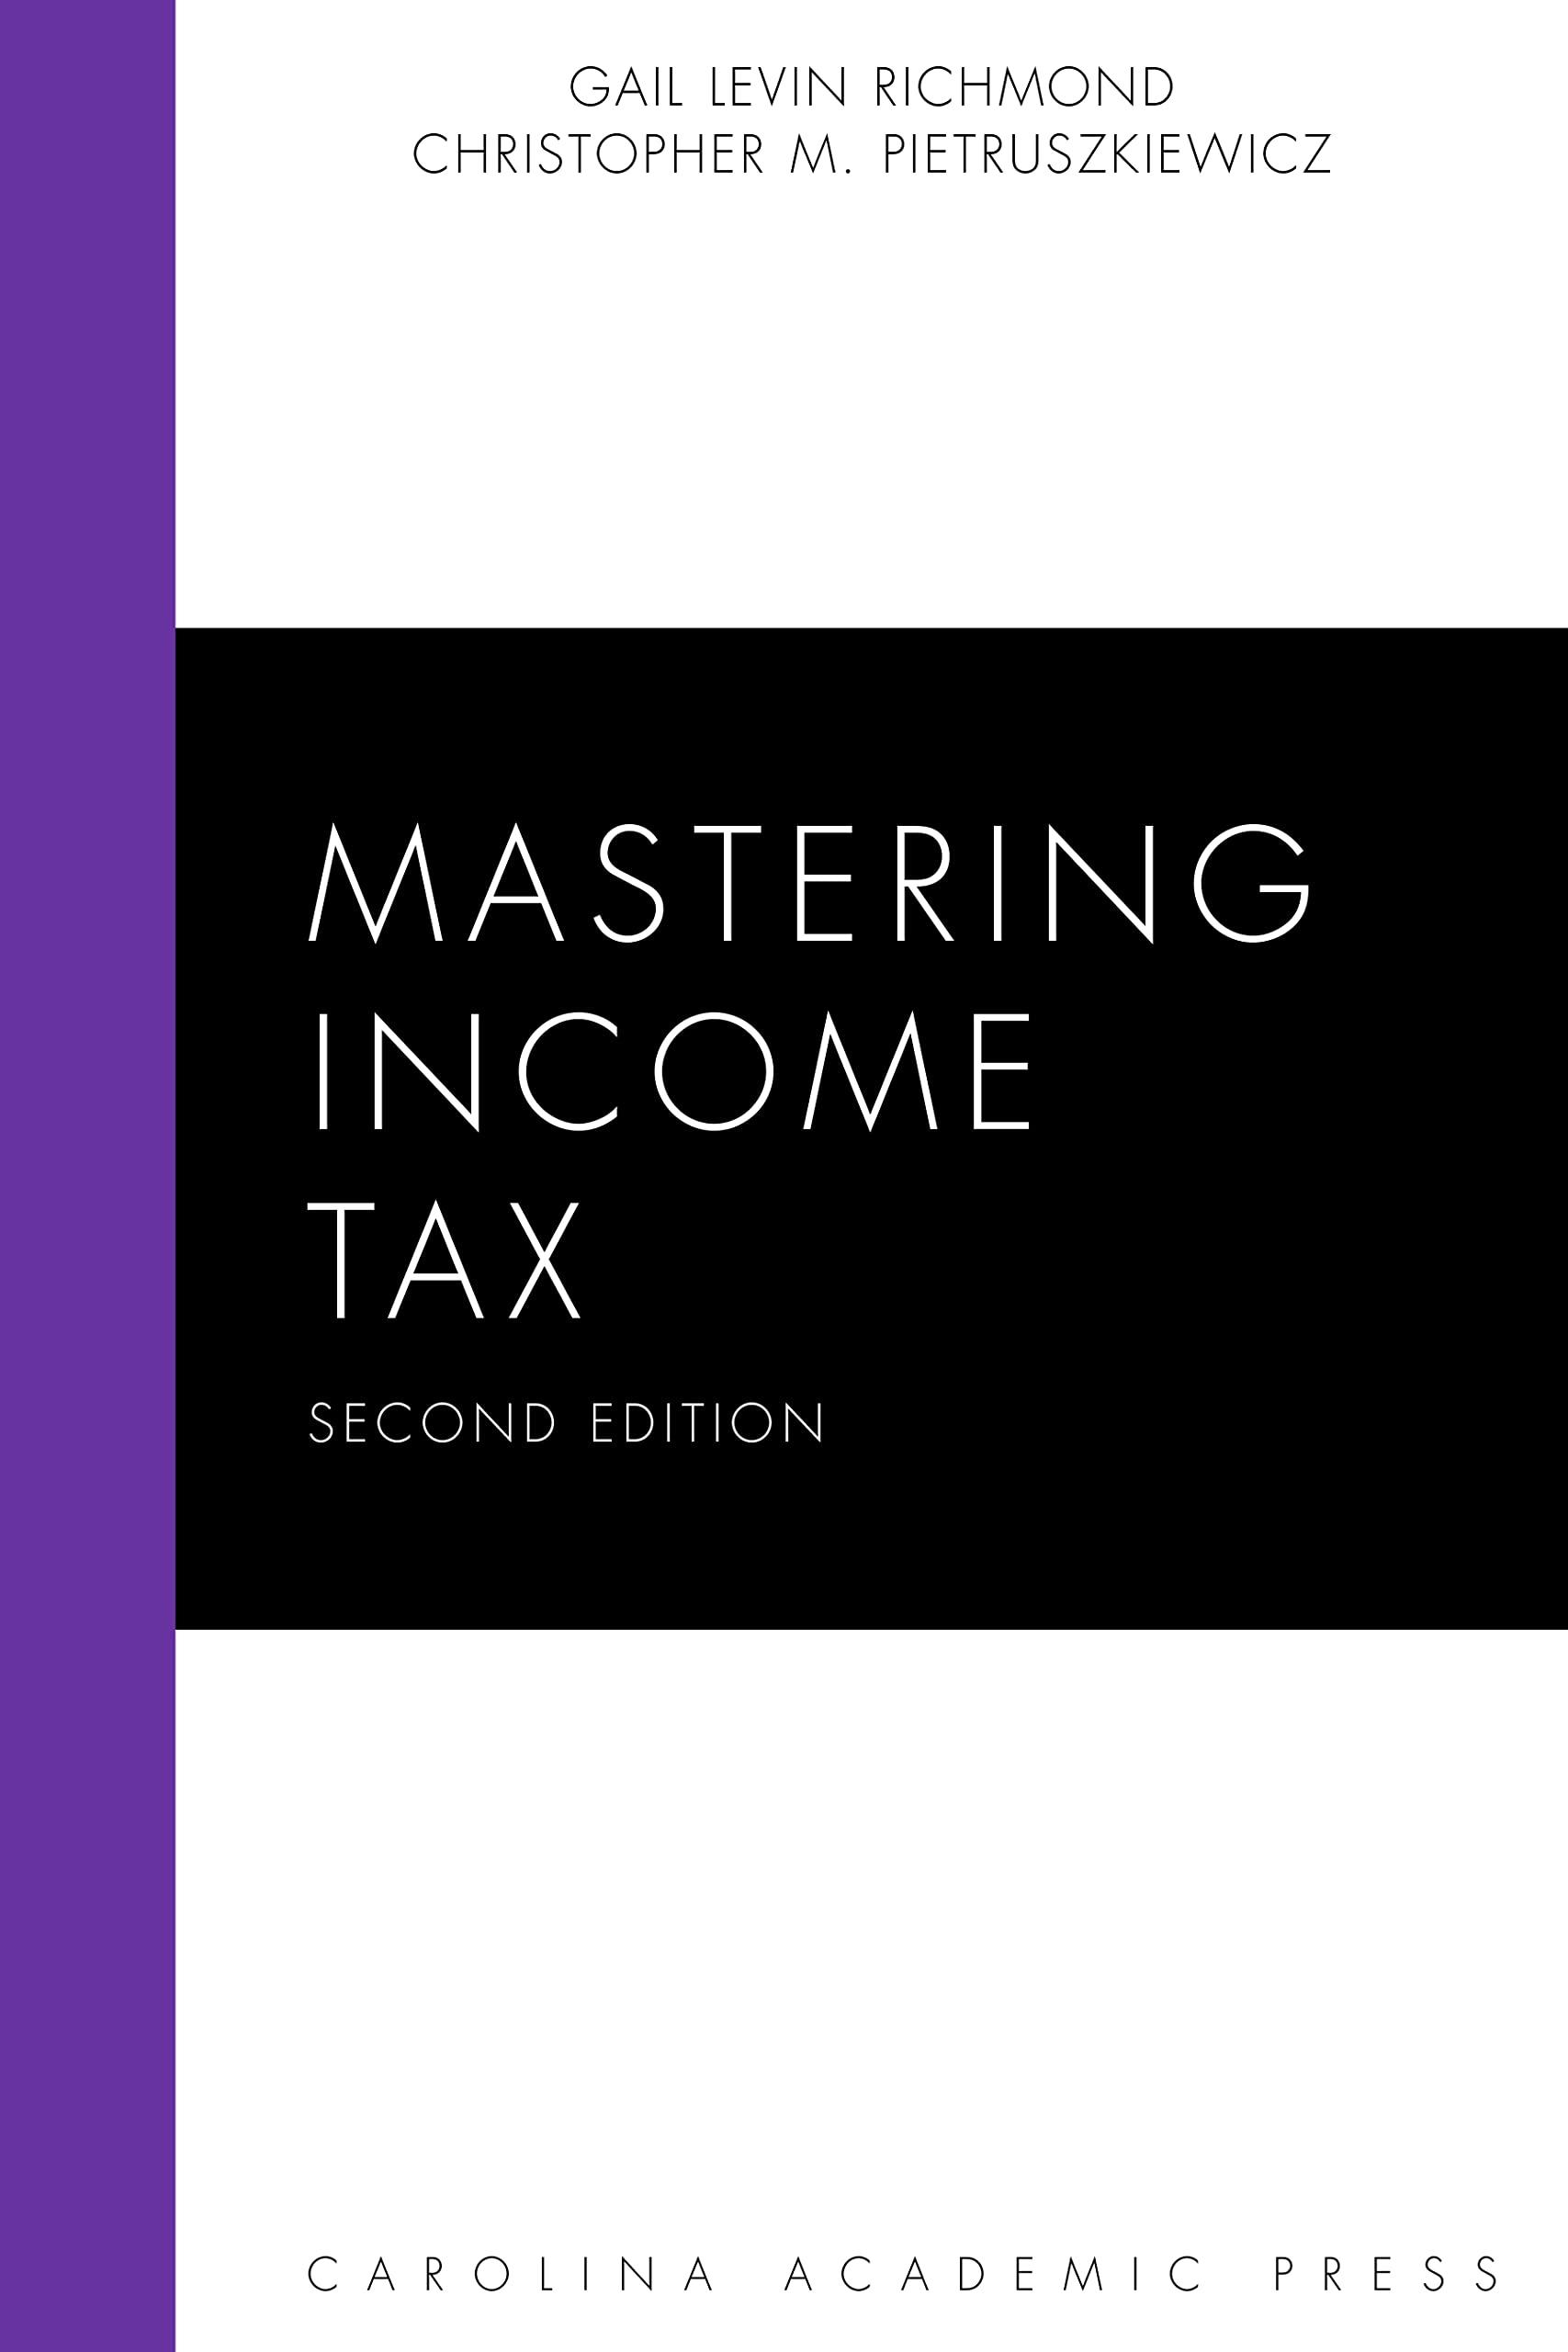 mastering income tax 2nd edition gail richmond, christopher pietruszkiewicz 1531016952, 9781531016951